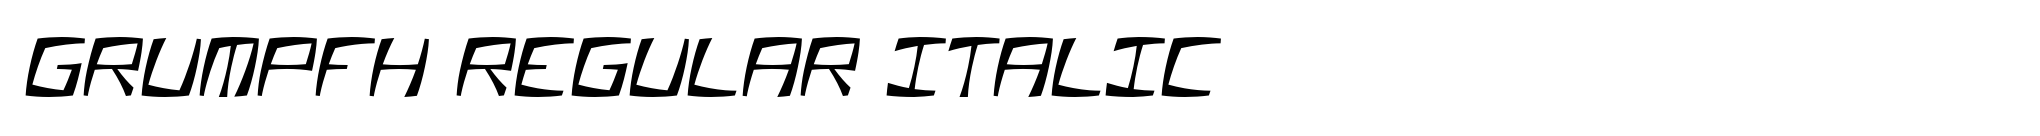 Grumpfh Regular Italic image